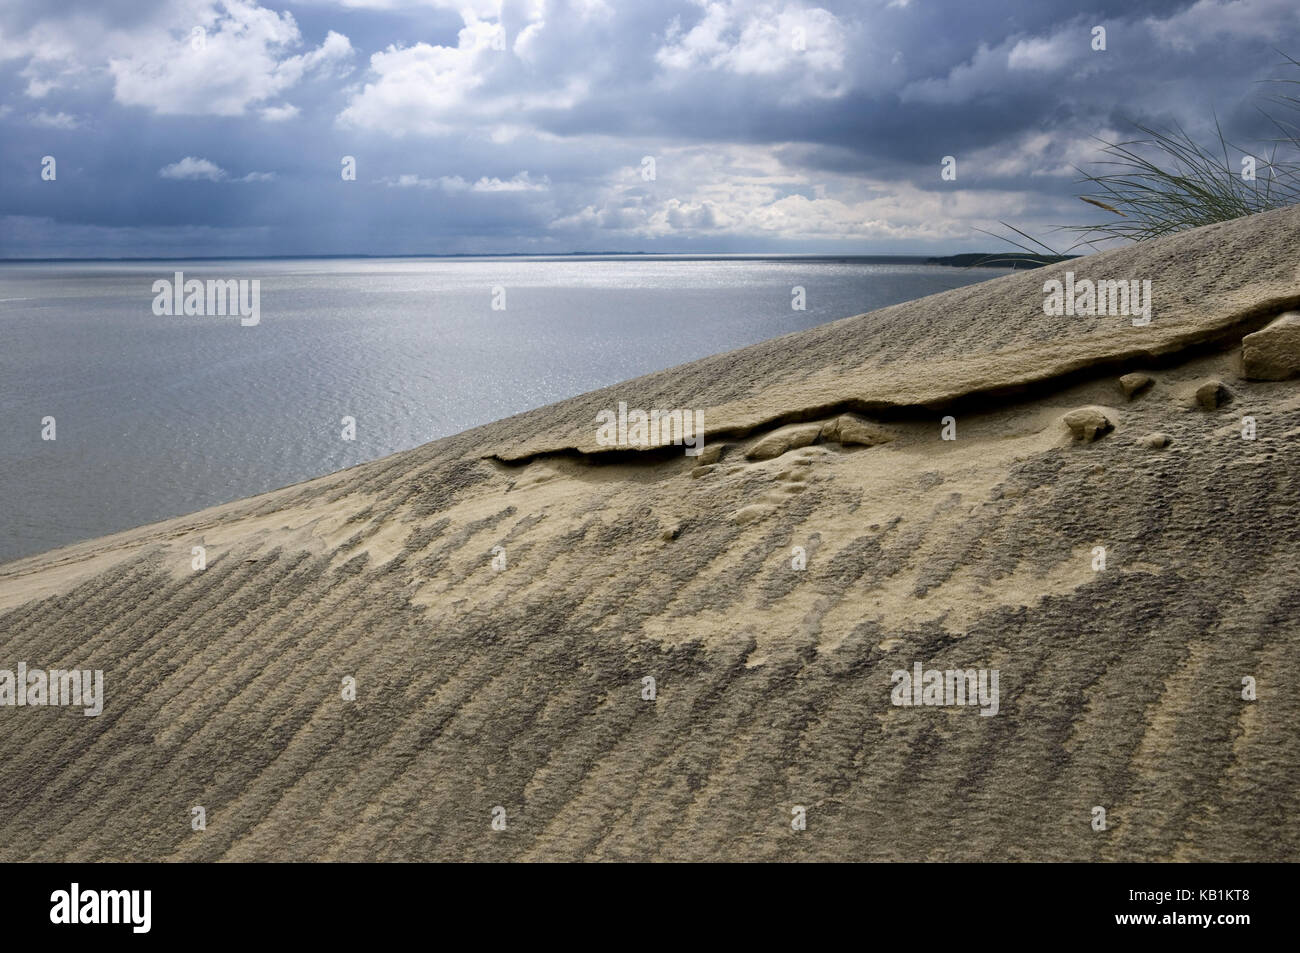 Lithuania, Nida, coast, Sand dunes with grass, sky, clouds, Stock Photo